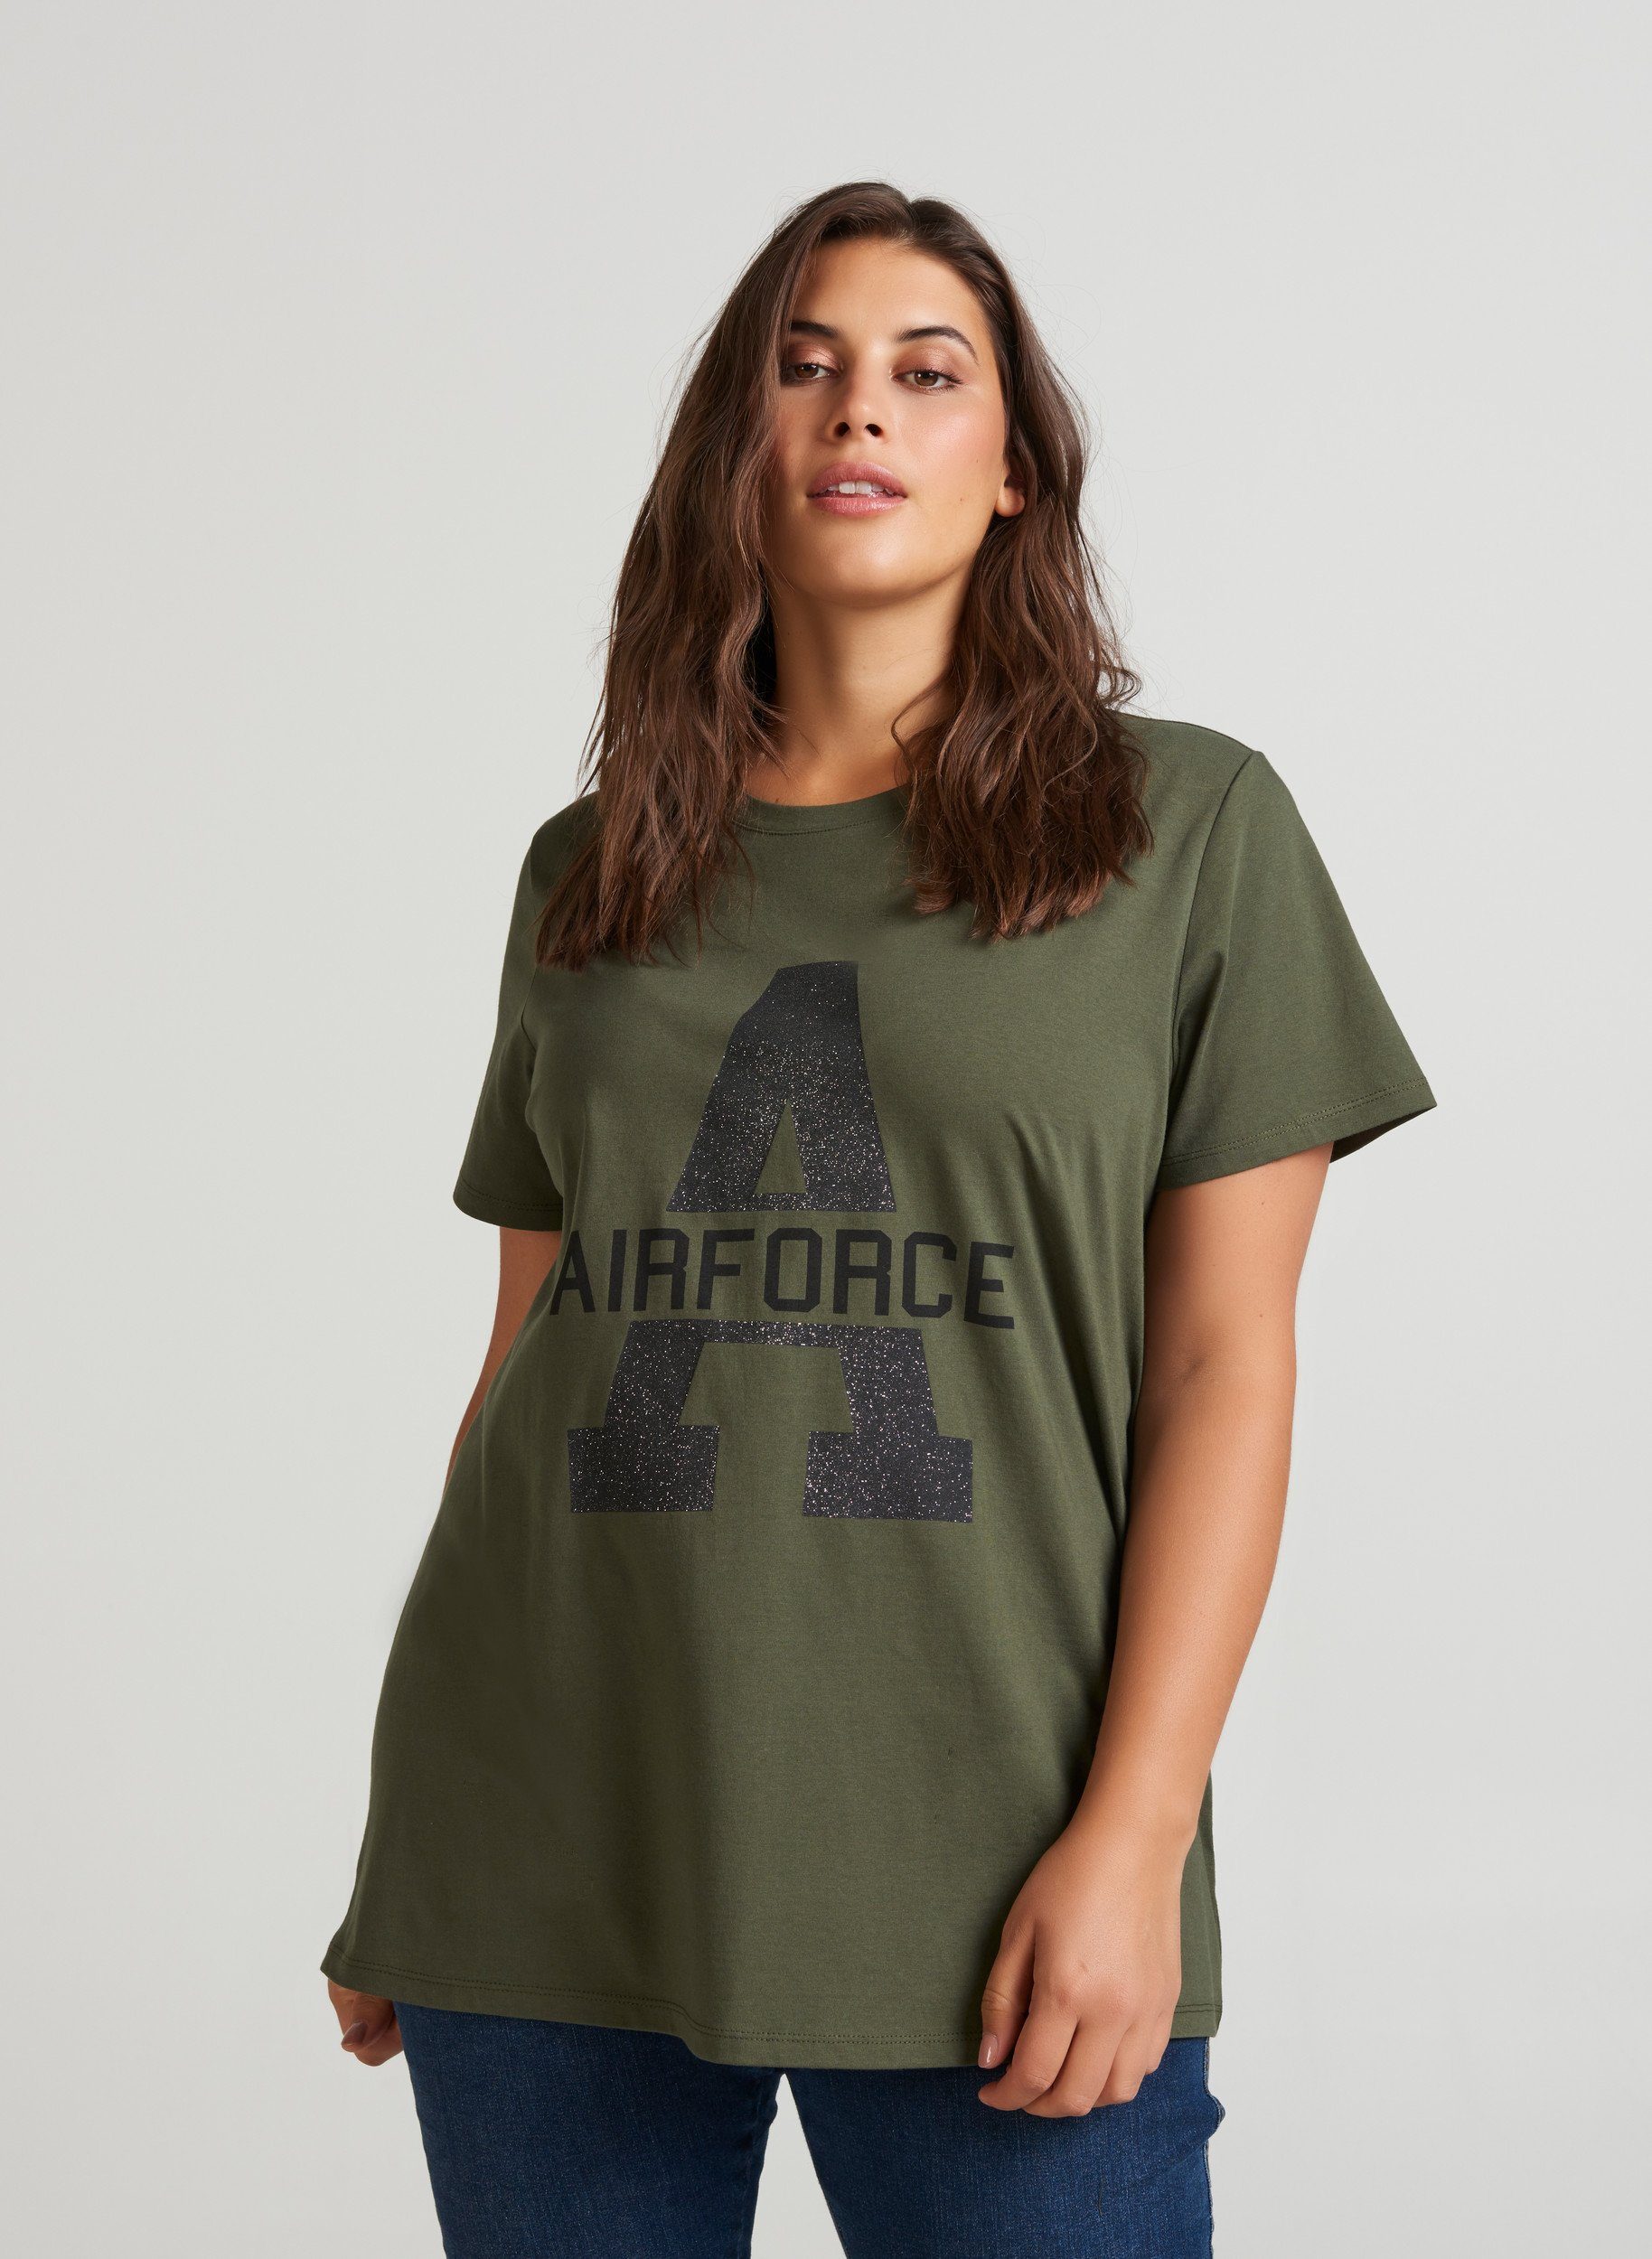 Zizzi T-Shirt Damen Große Größen T-Shirt Print Kurzarm Baumwolle Oberteil  online kaufen | OTTO